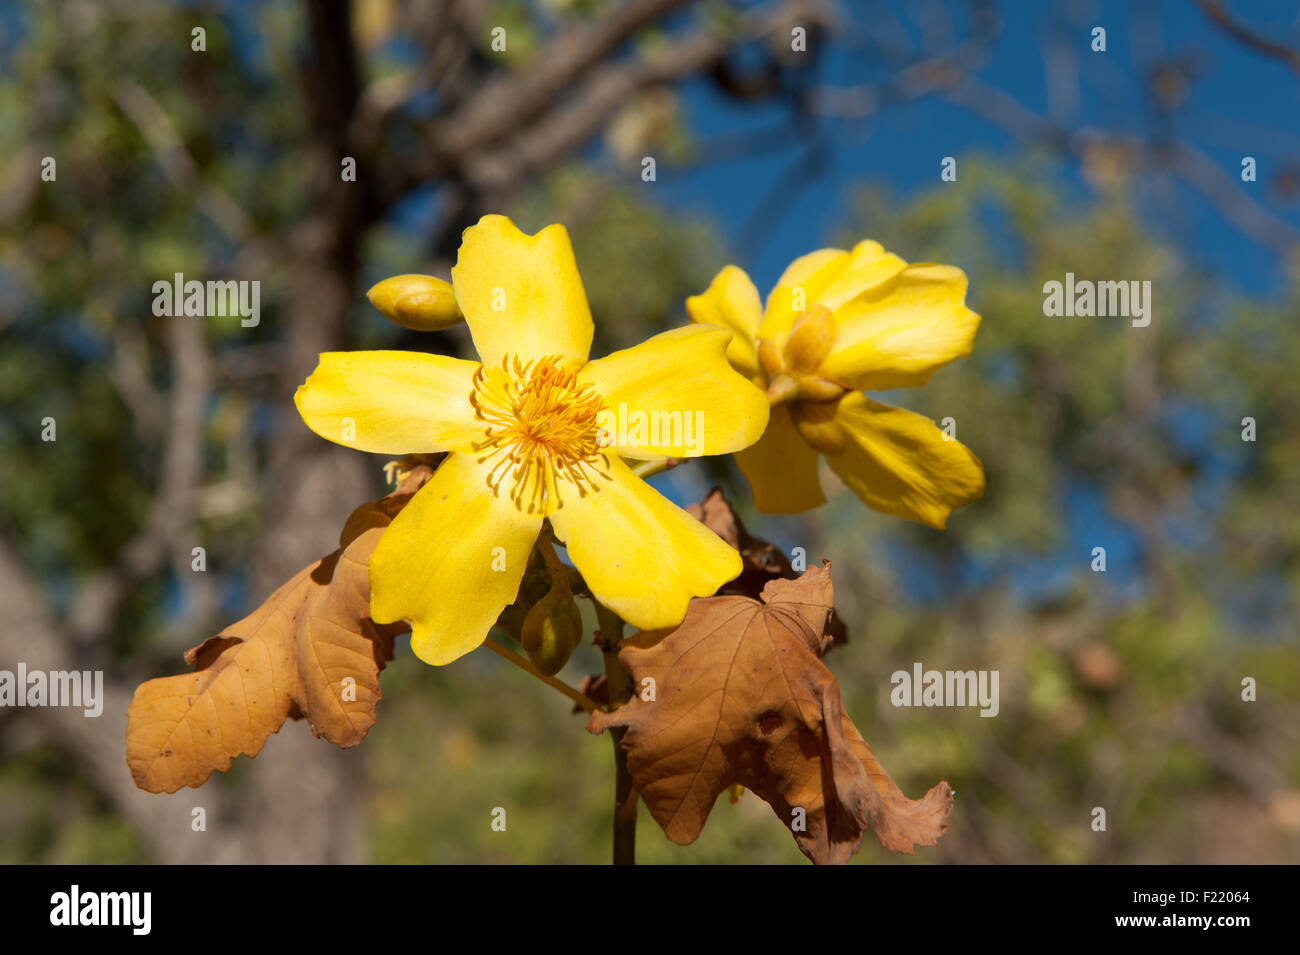 Flowering Kapok tree at Edith Falls (Leliyn), Nitmiluk National Park, Northern Territory, Australia Stock Photo